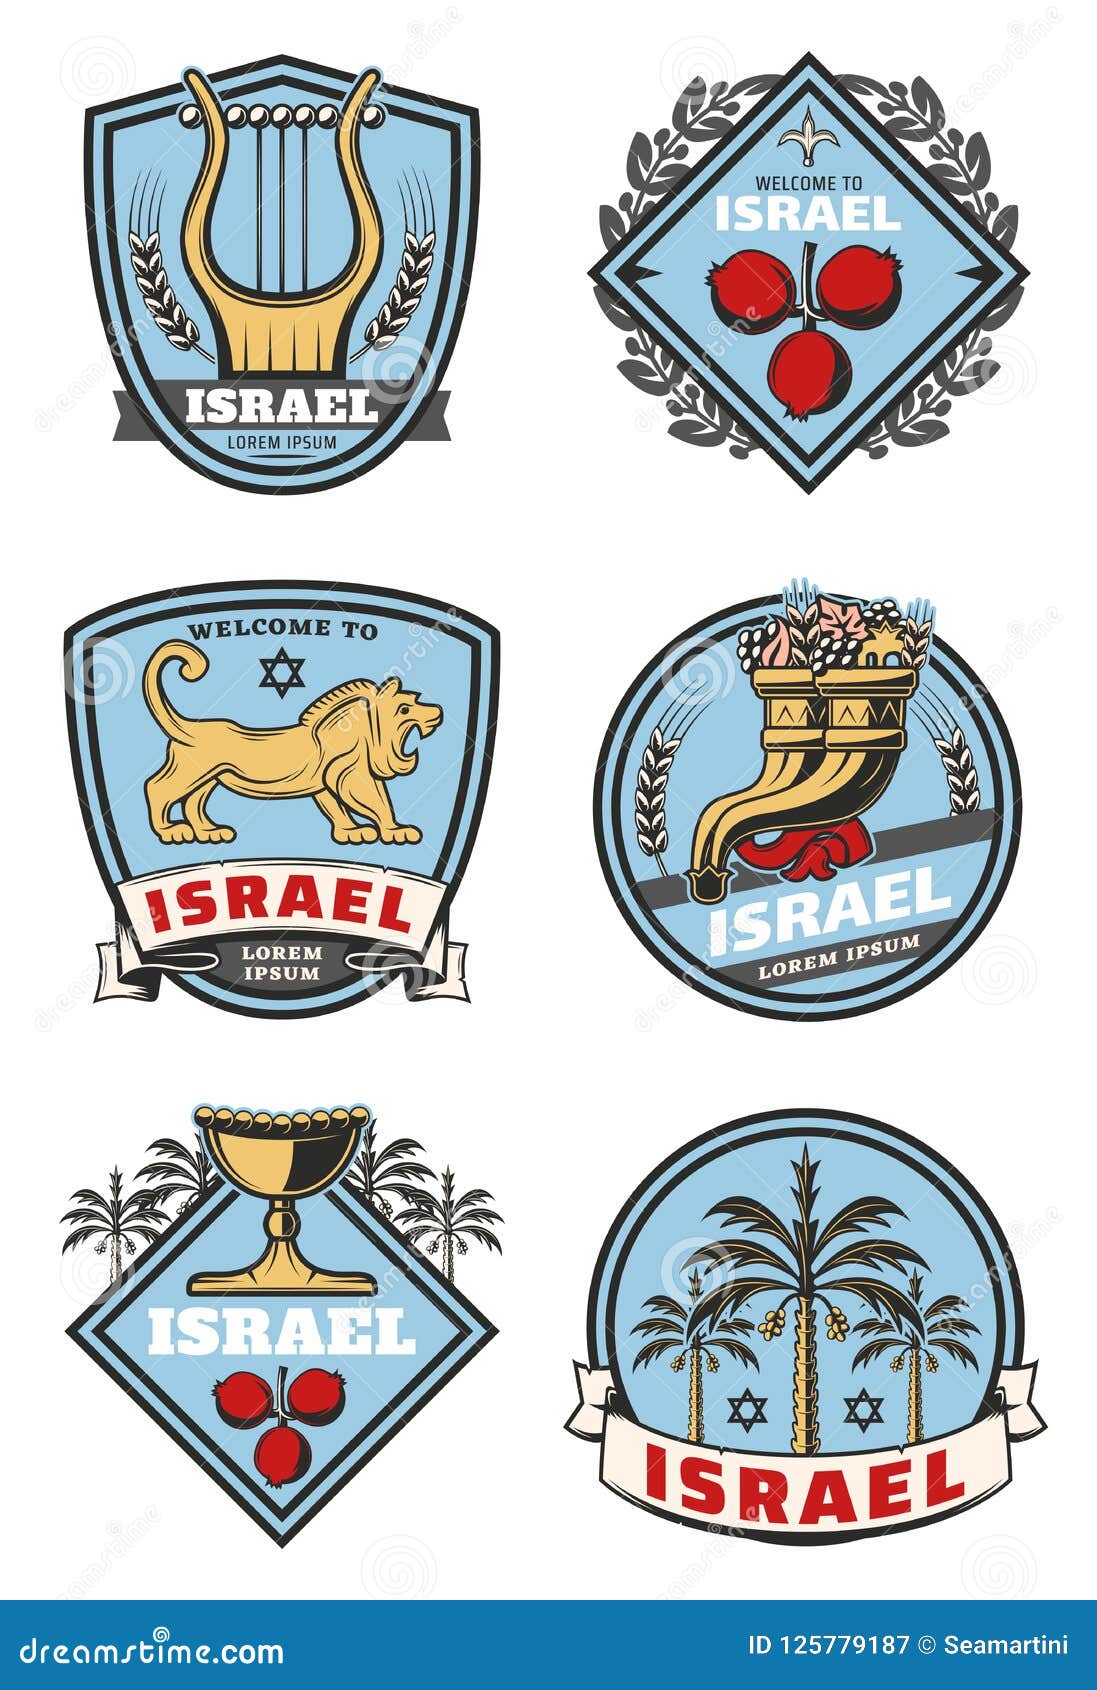 israel tourism symbol